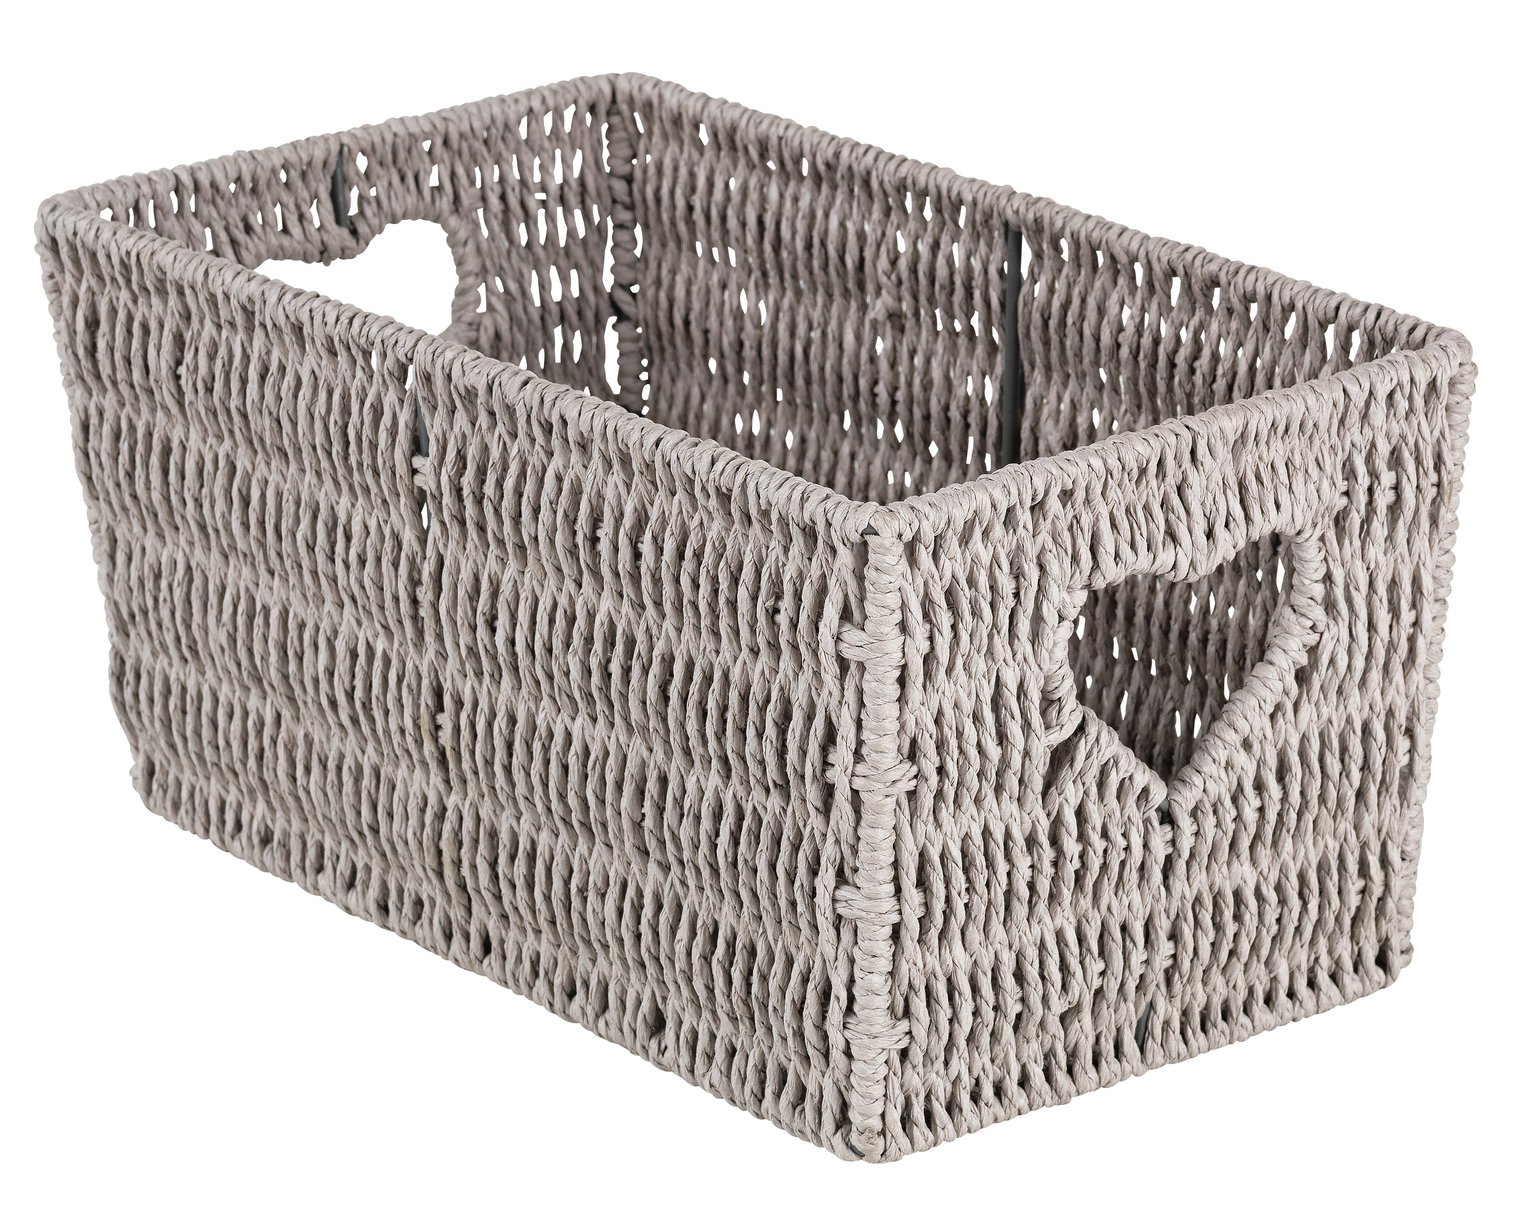 Argos Home Small Woven Heart Storage Basket